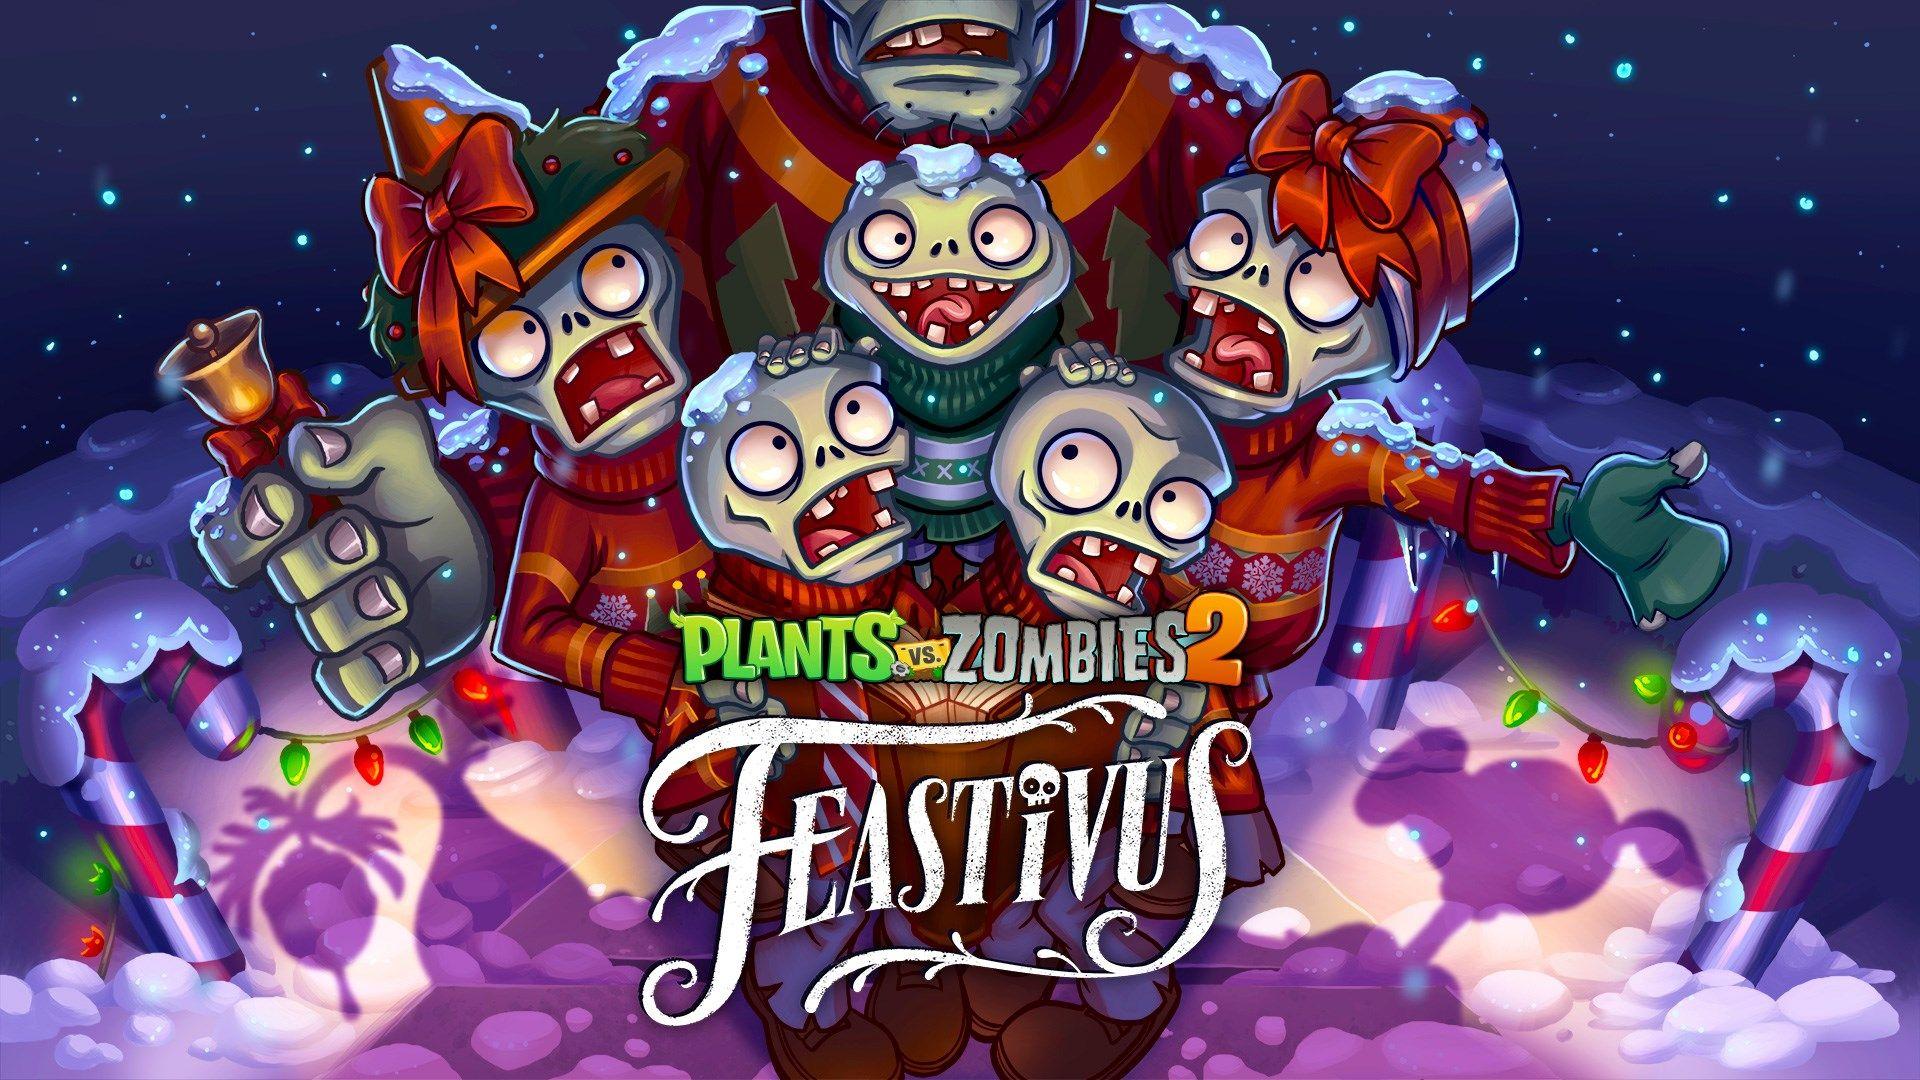 Plants vs Zombies 2 game wallpaper